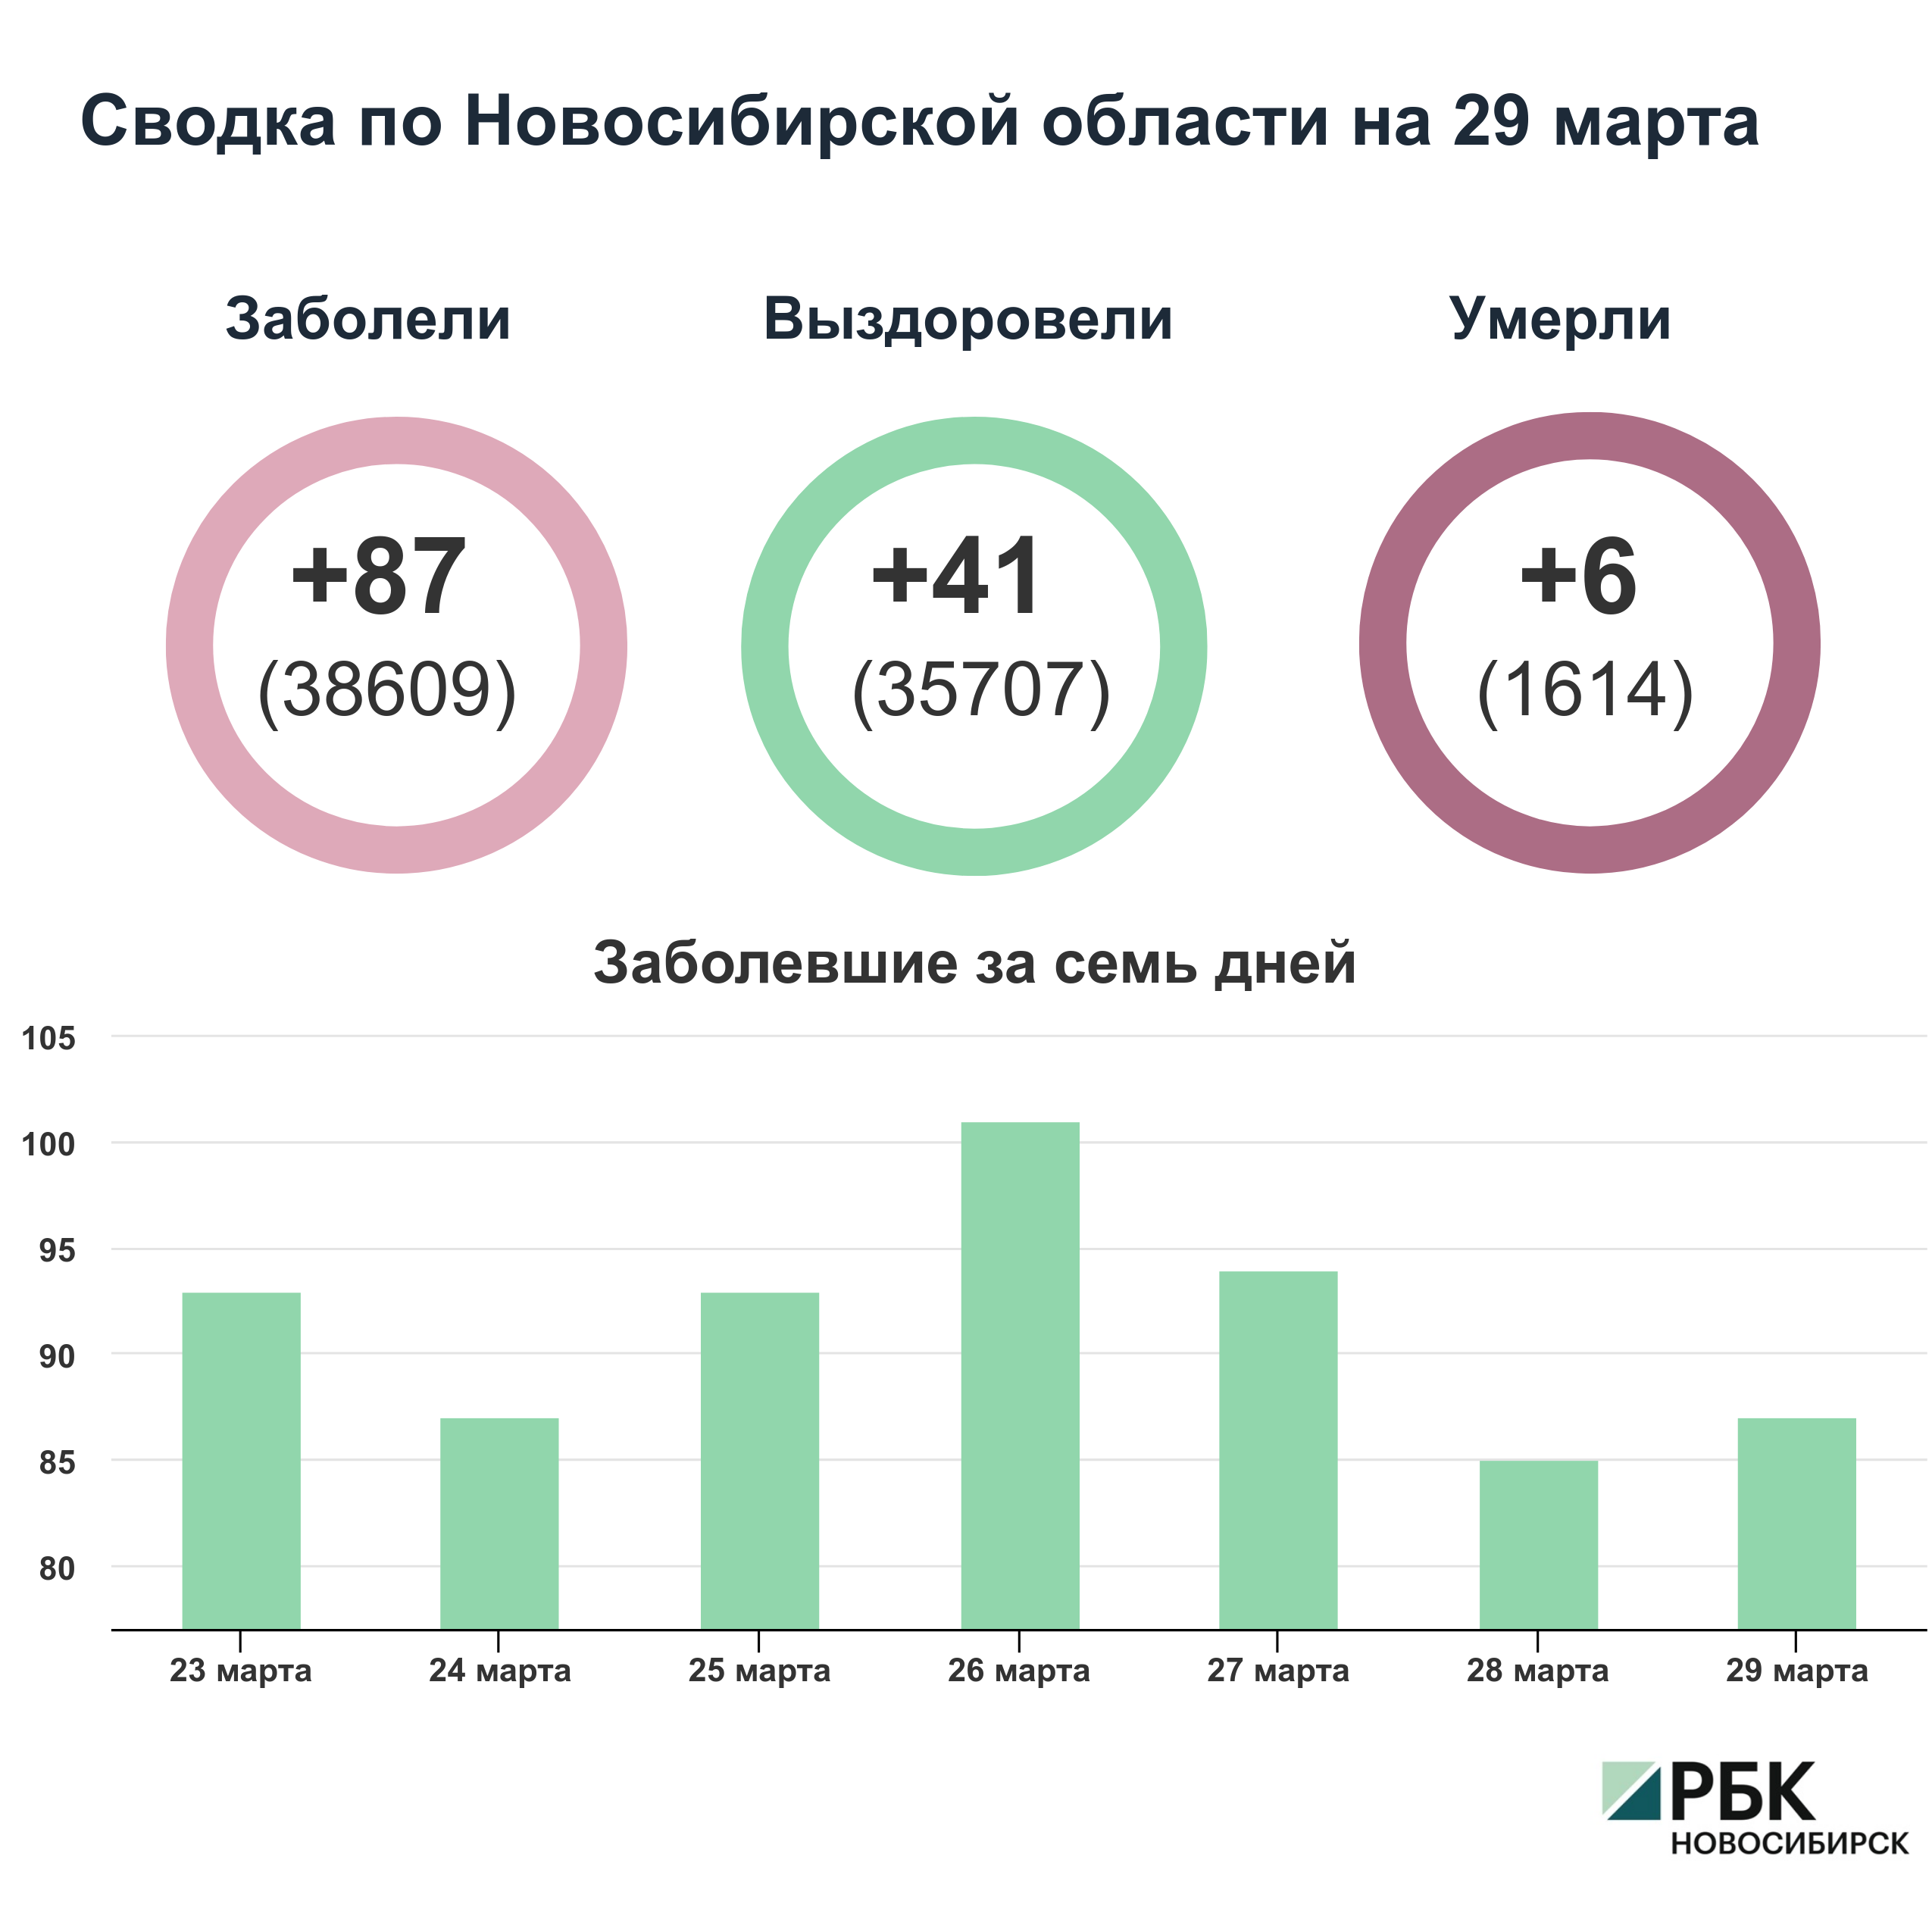 Коронавирус в Новосибирске: сводка на 29 марта